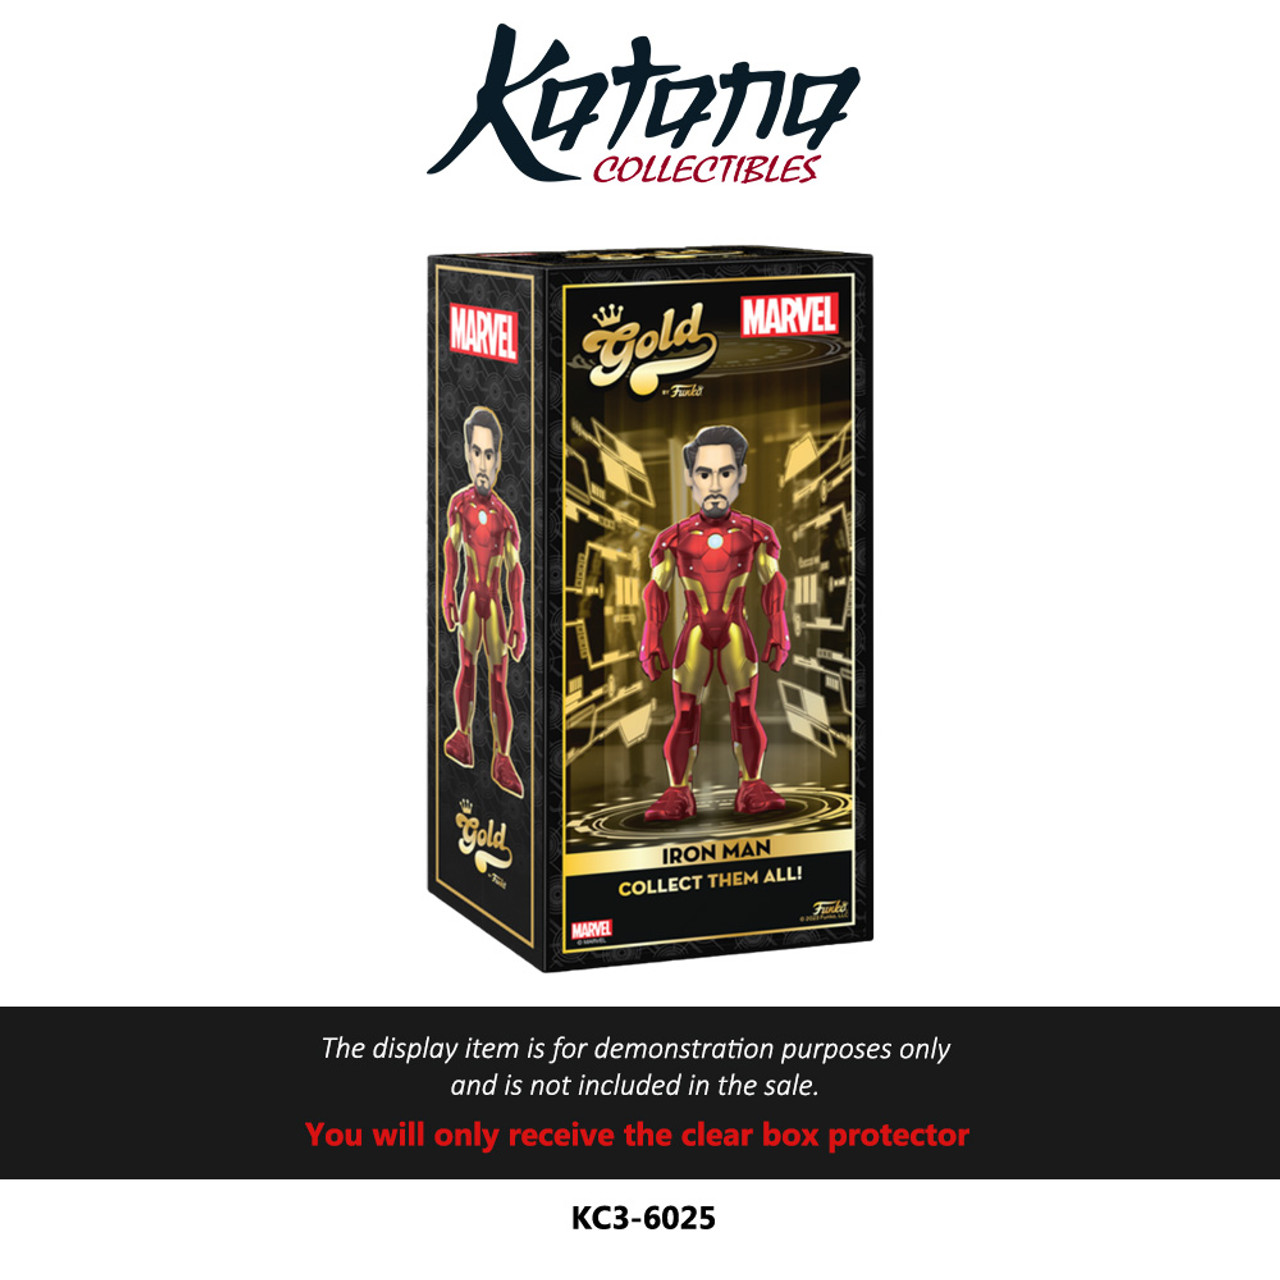 Katana Collectibles Protector For Funko Gold Premium 18" Vinyl Figure - Iron Man